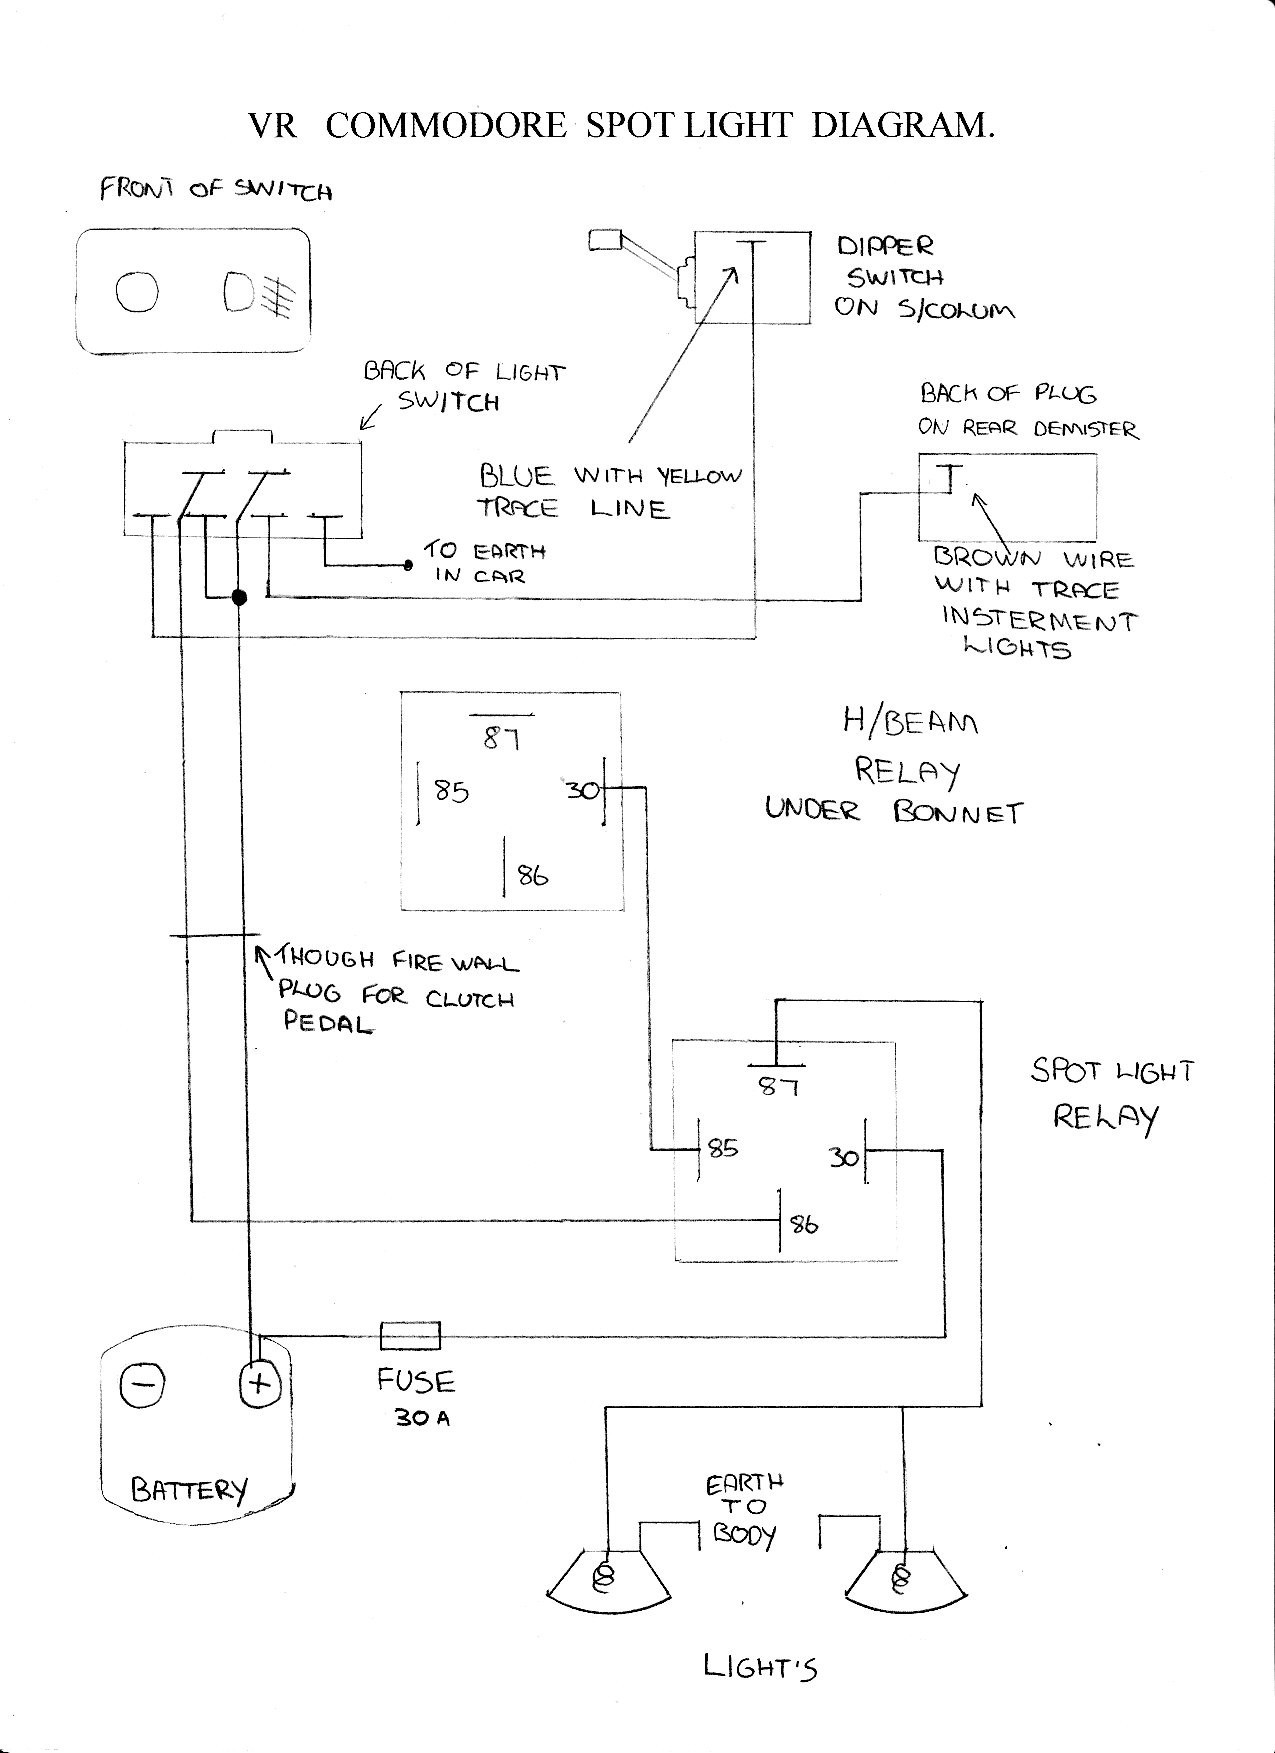 Wiring Diagram Plug Switch Light Fresh Wiring Diagram Plug Switch Light New Vr Vs Fog Lamp Wiring Diagram